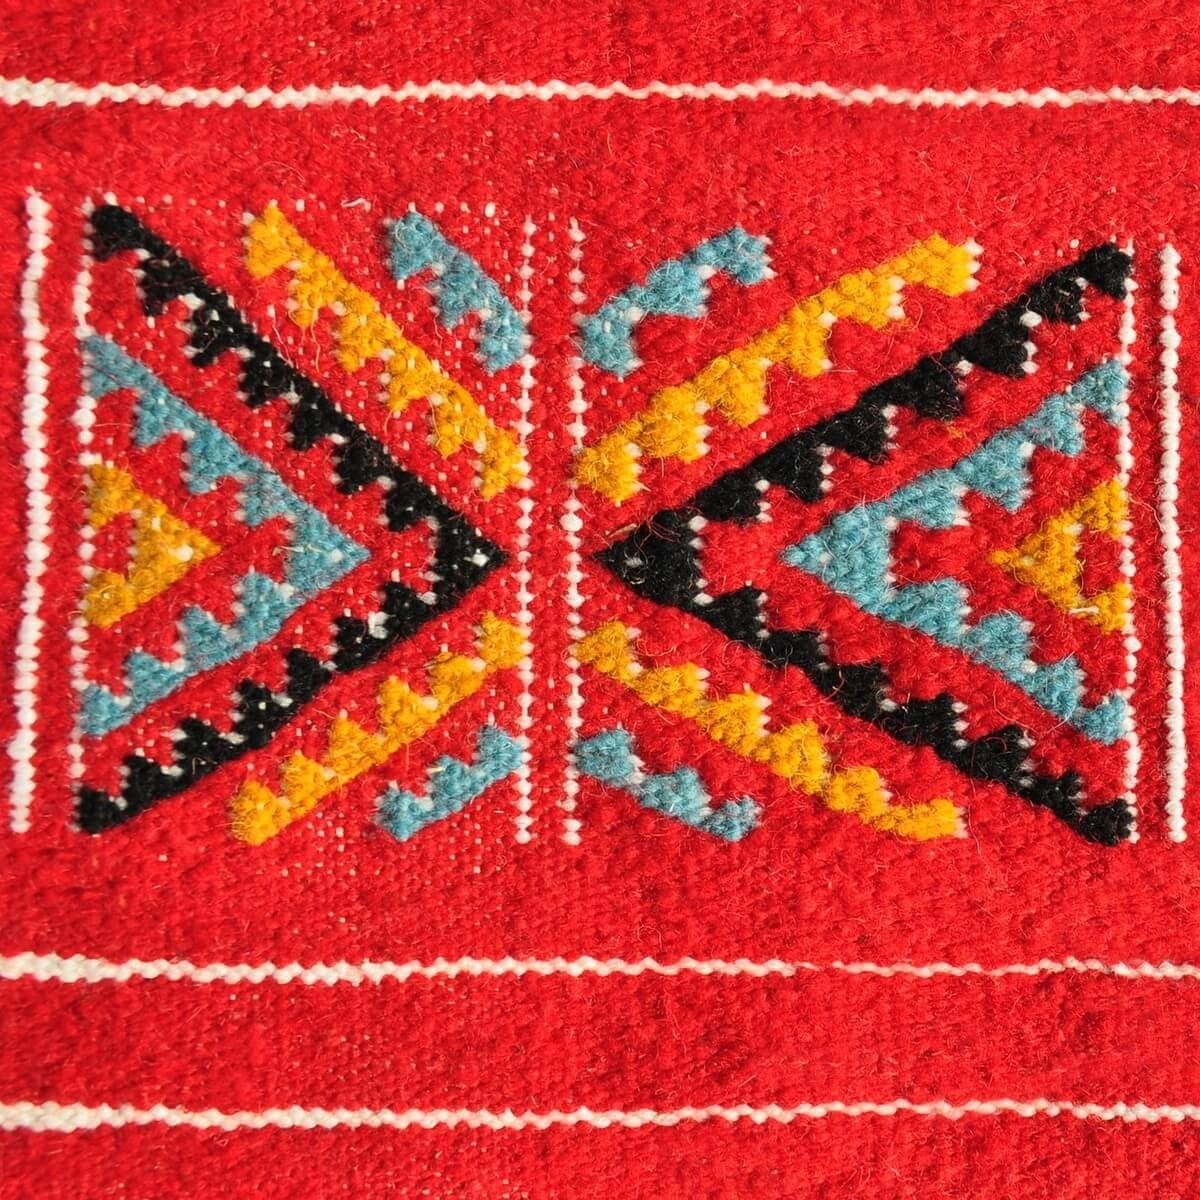 Berber tapijt Tapijt Kilim Tazarka 115x220 Veelkleurig (Handgeweven, Wol, Tunesië) Tunesisch kilimdeken, Marokkaanse stijl. Rech